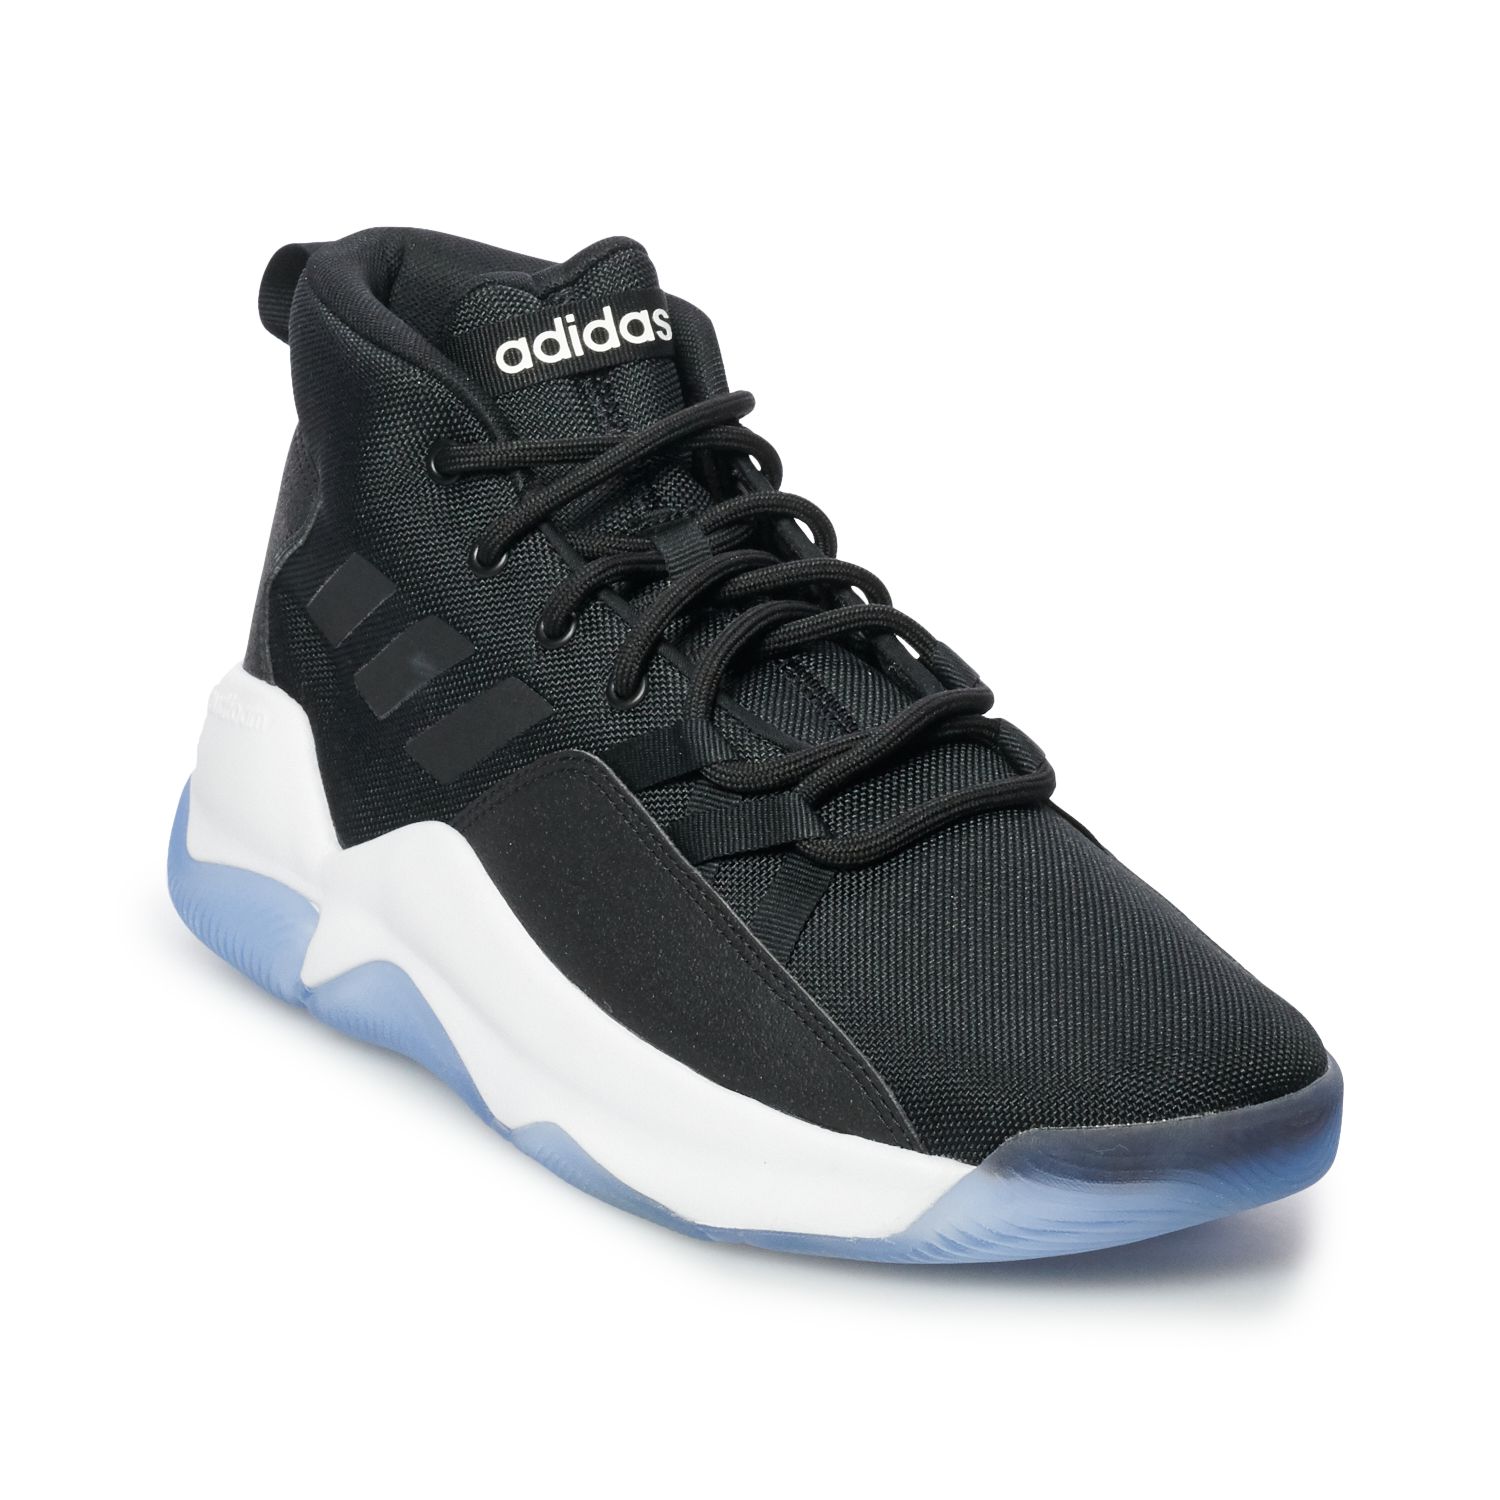 adidas Streetfire Men's Basketball Shoes